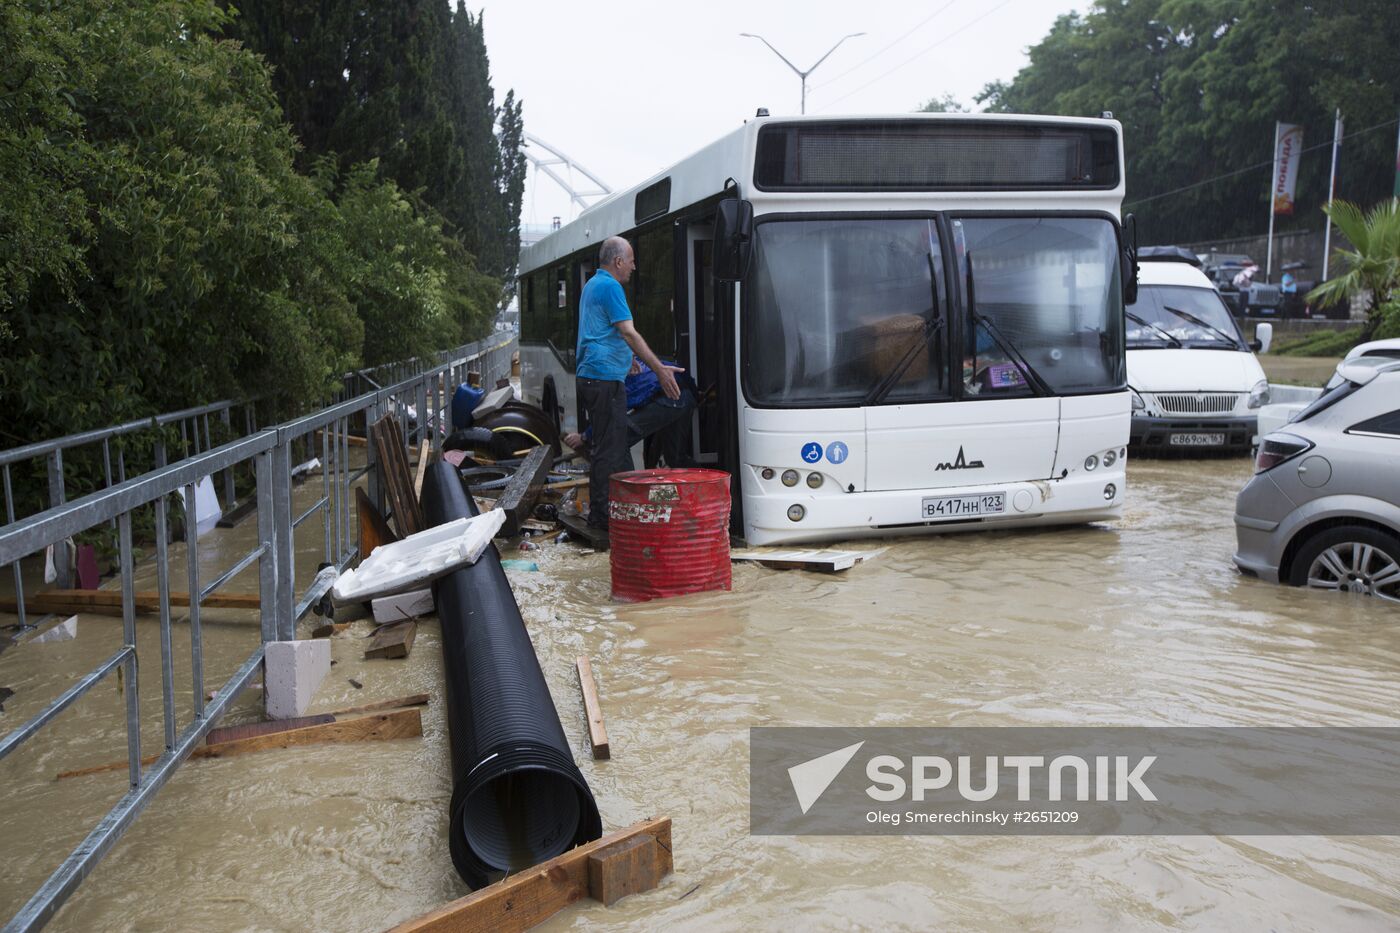 Sochi hit by flooding